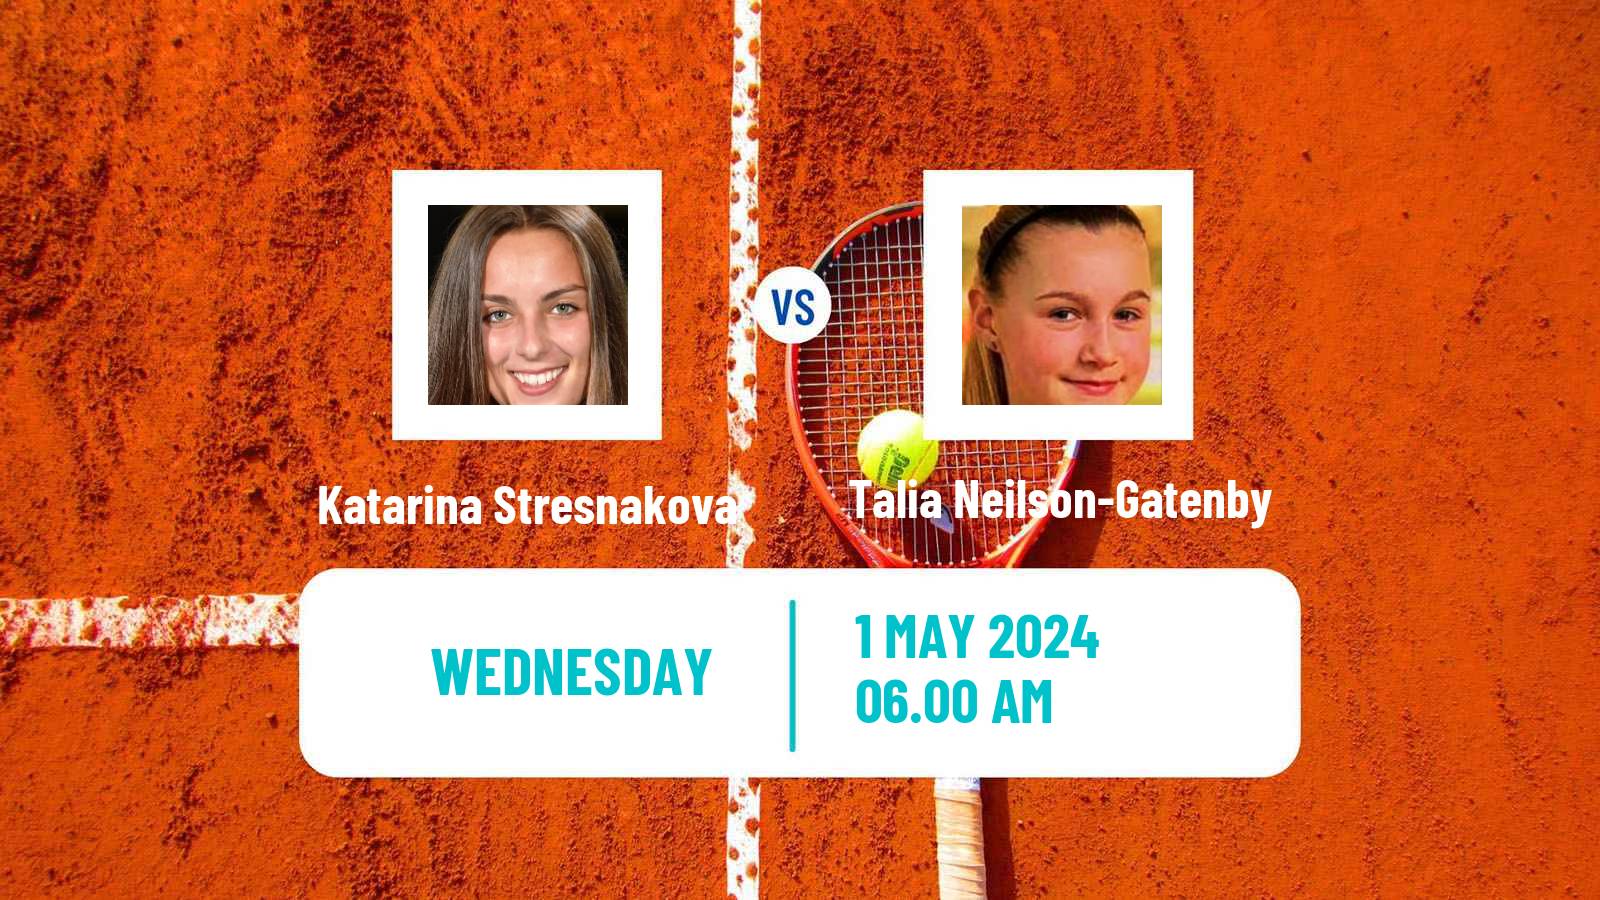 Tennis ITF W35 Nottingham 2 Women Katarina Stresnakova - Talia Neilson-Gatenby